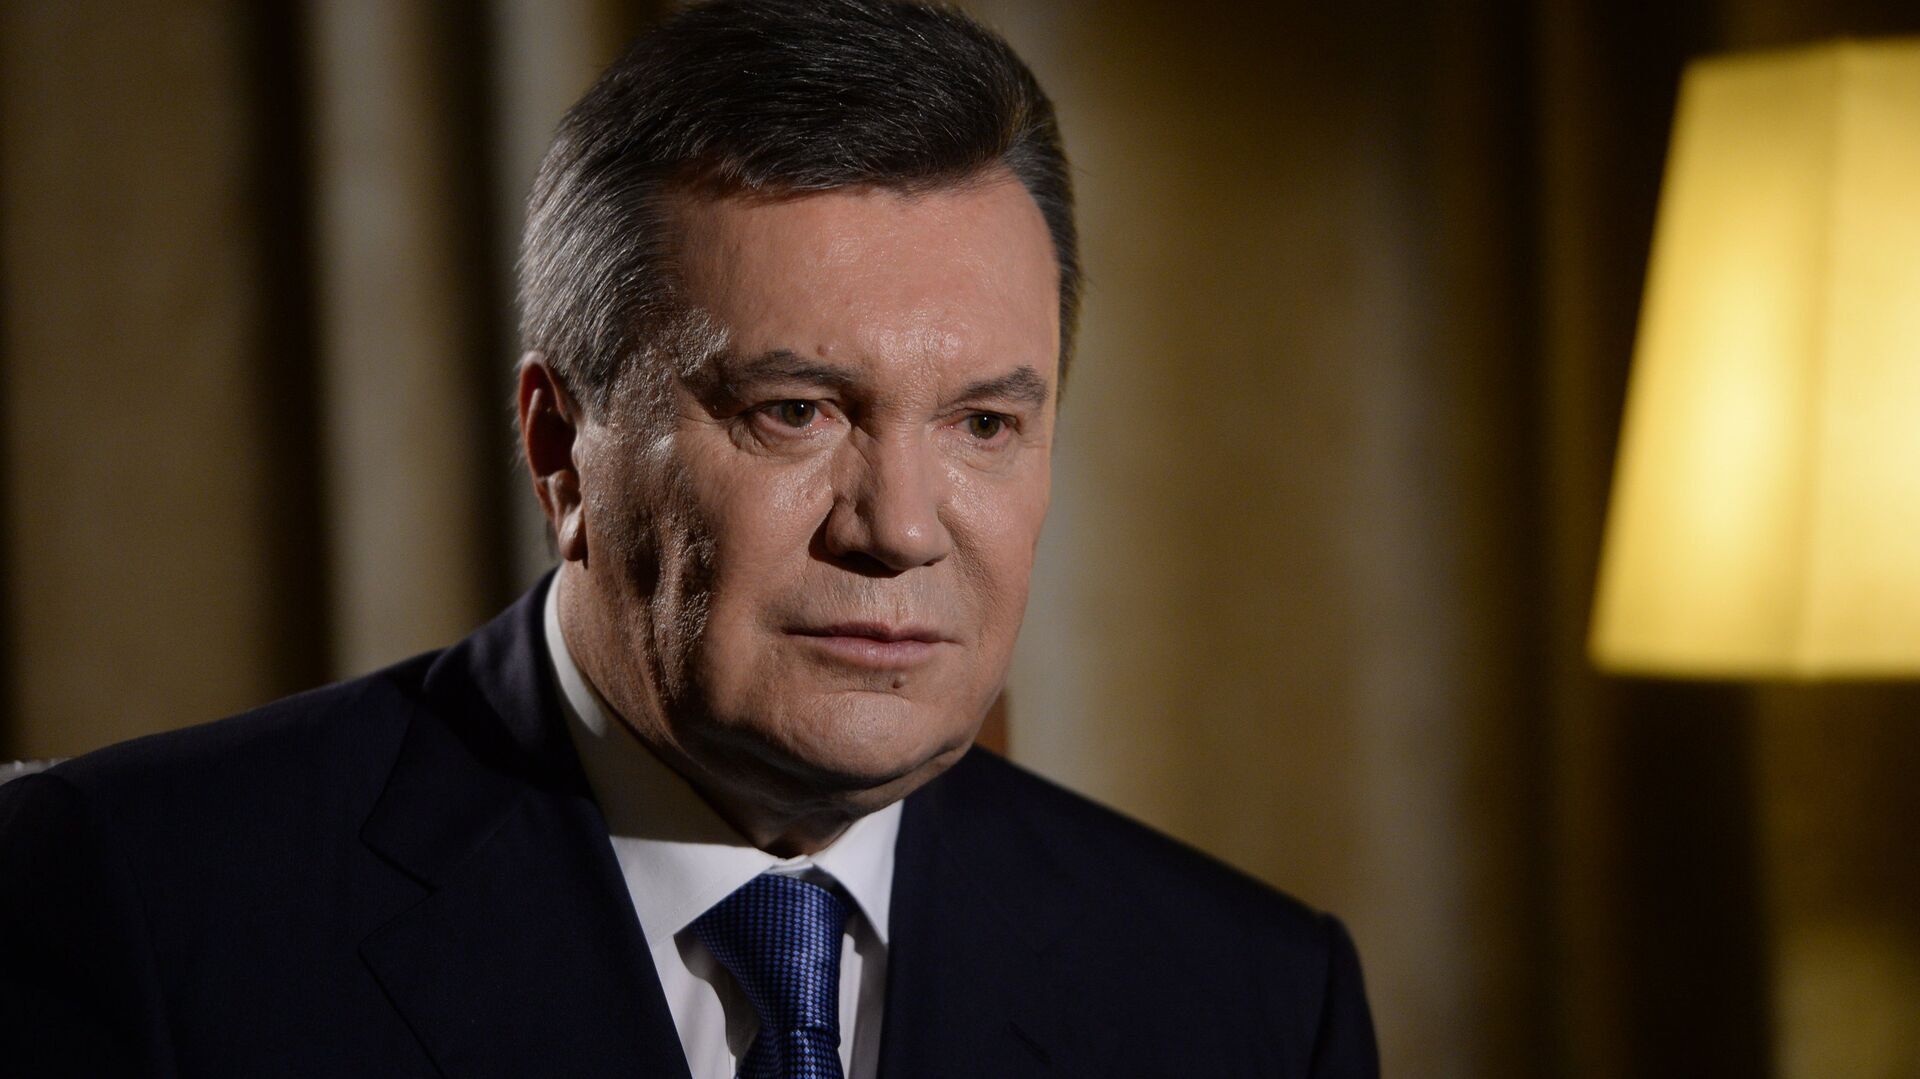 Former Ukrainian President Viktor Yanukovych interviewed by RIA Novosti - Sputnik International, 1920, 14.03.2022